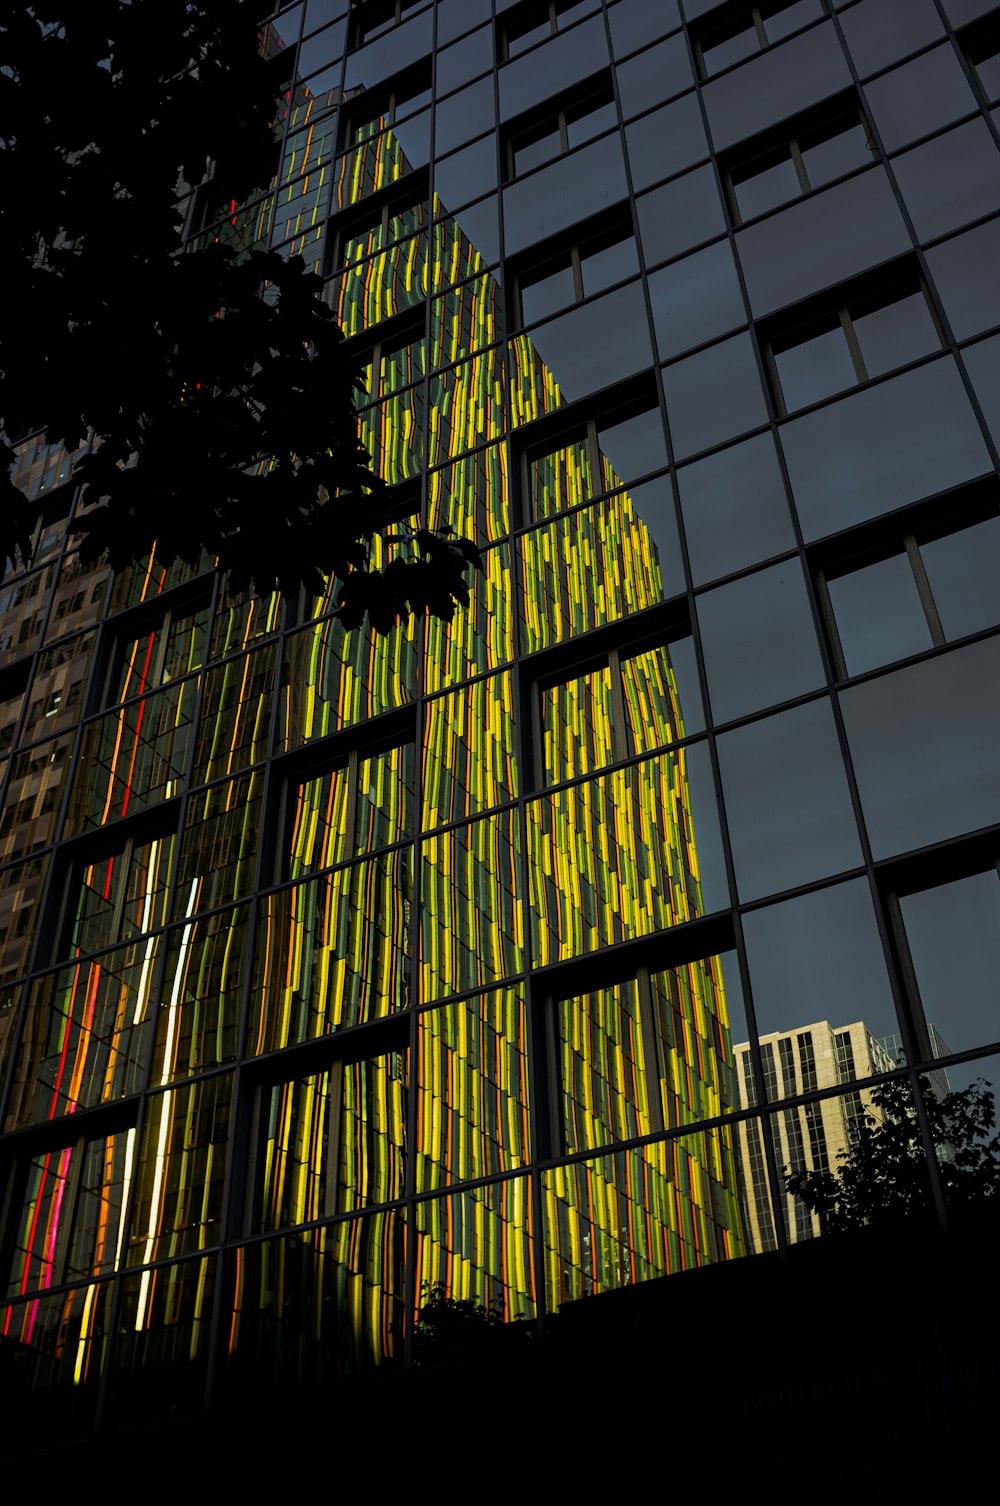 grayscale photo of glass window building